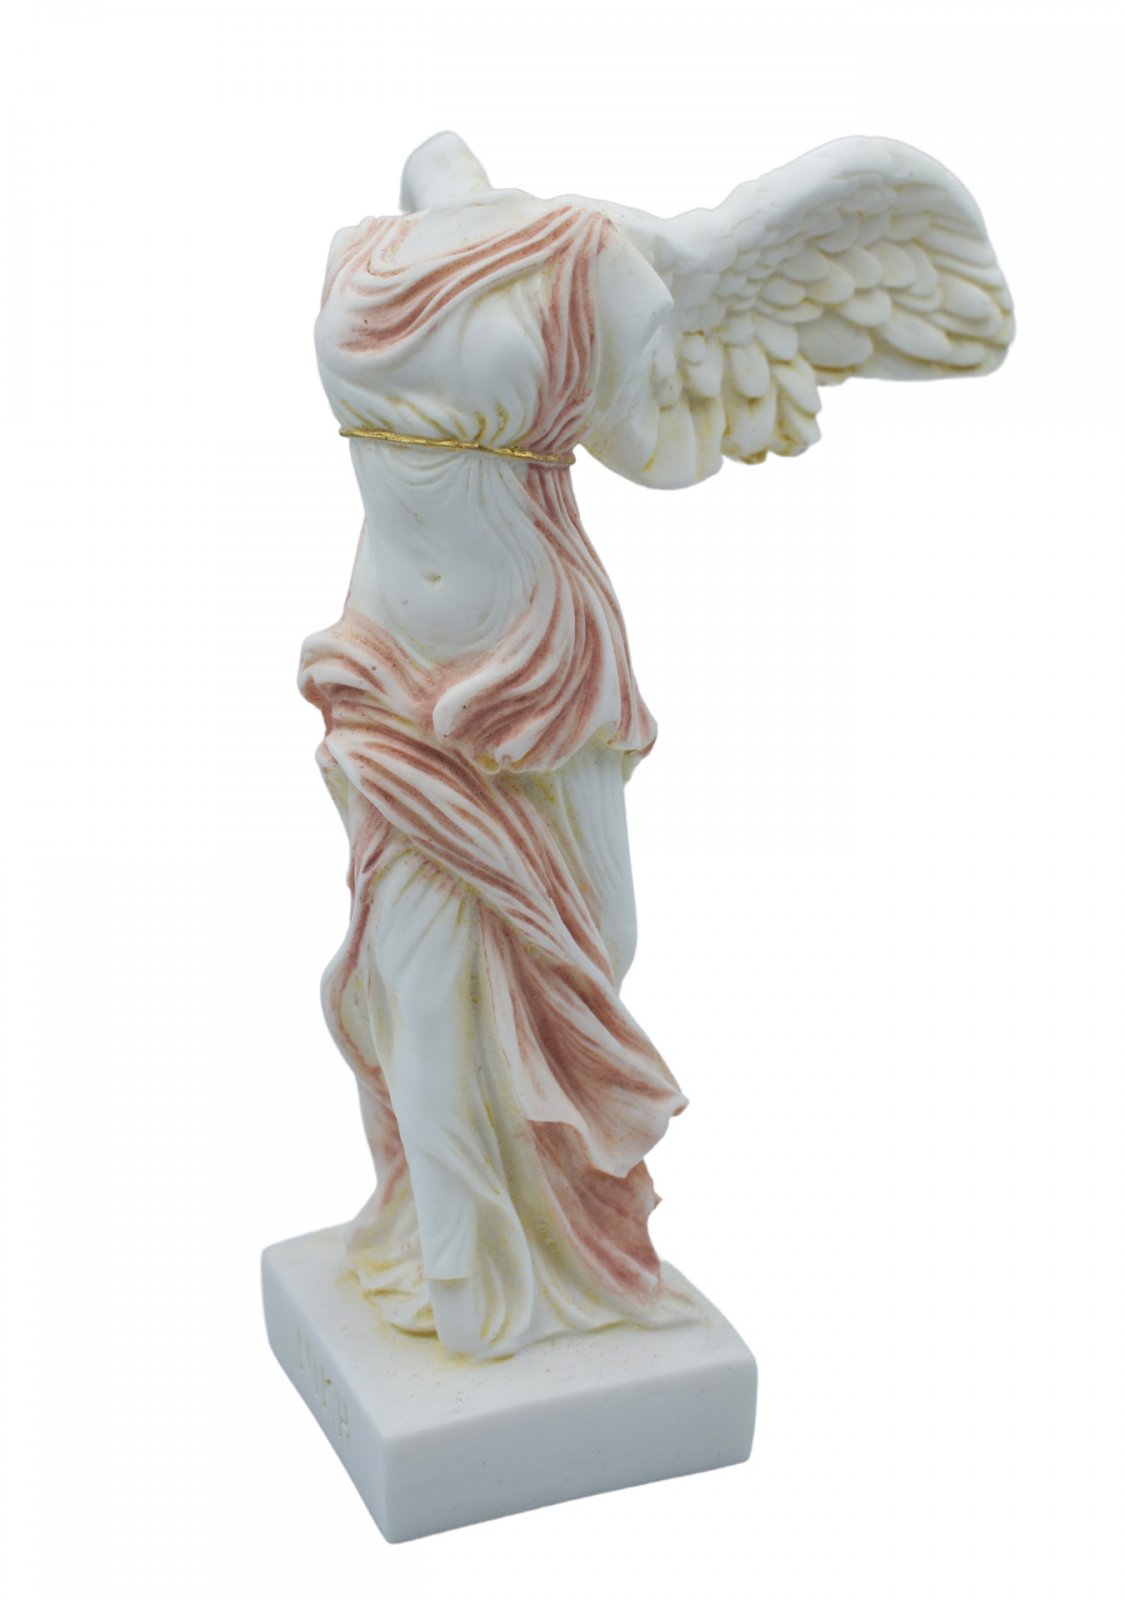 Nike of Samothrace greek alabaster statue with color